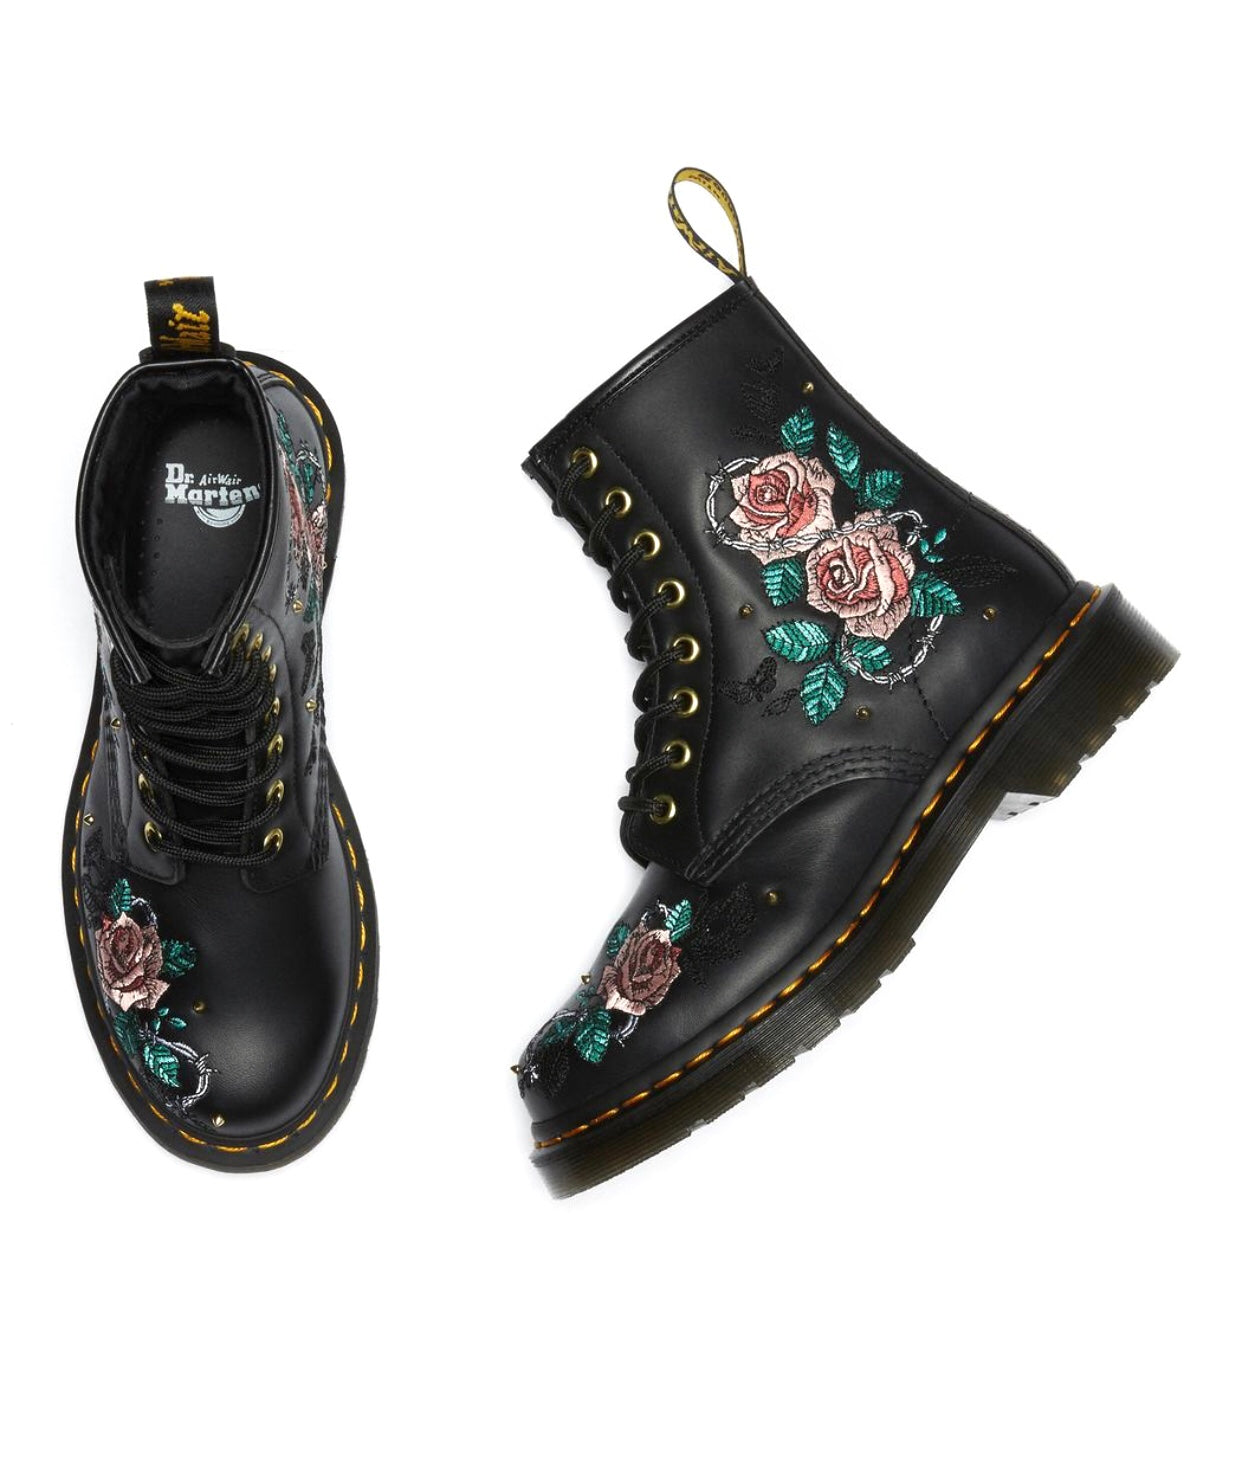 Dr. Martens 1460 Vonda Chain Black Nappa Floral 8 Eyelet Boot